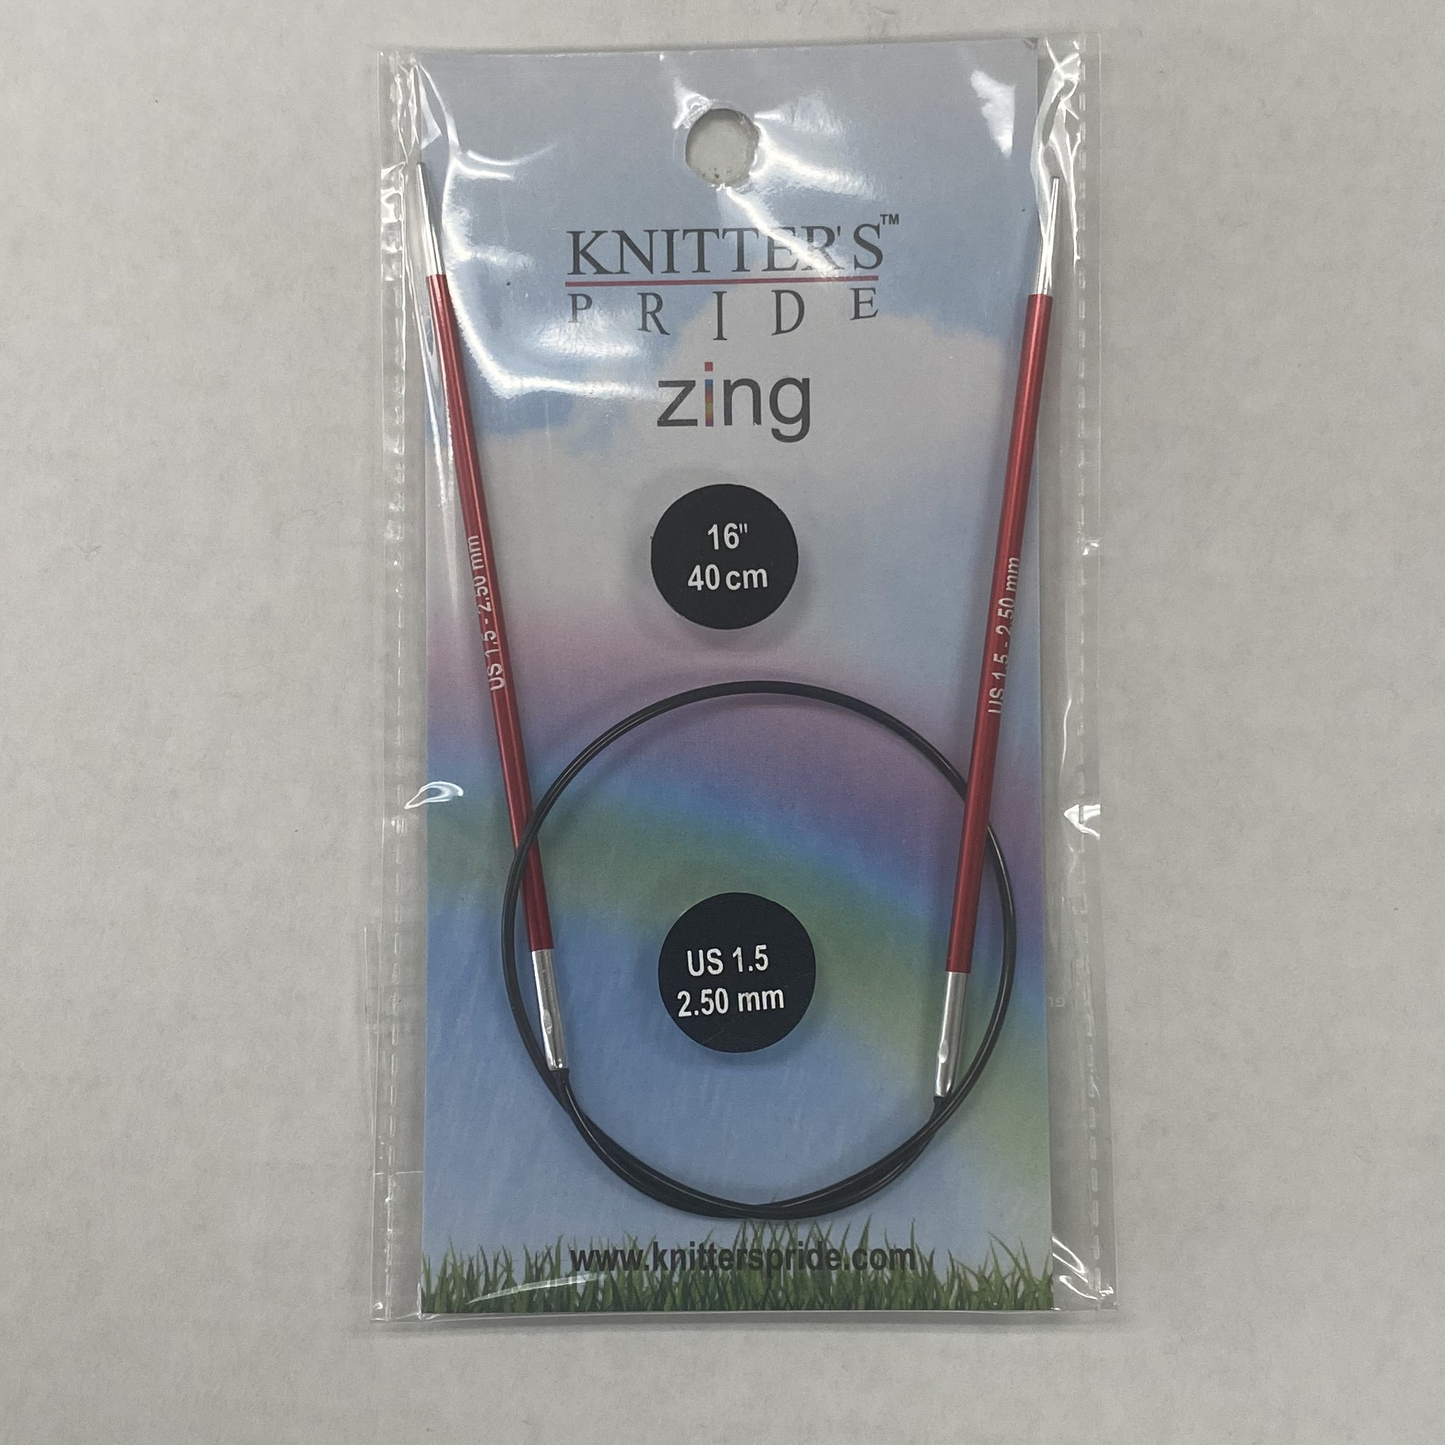 Knitter's Pride - Zing - US 1.5 / 2.50mm Fixed Circular Needles